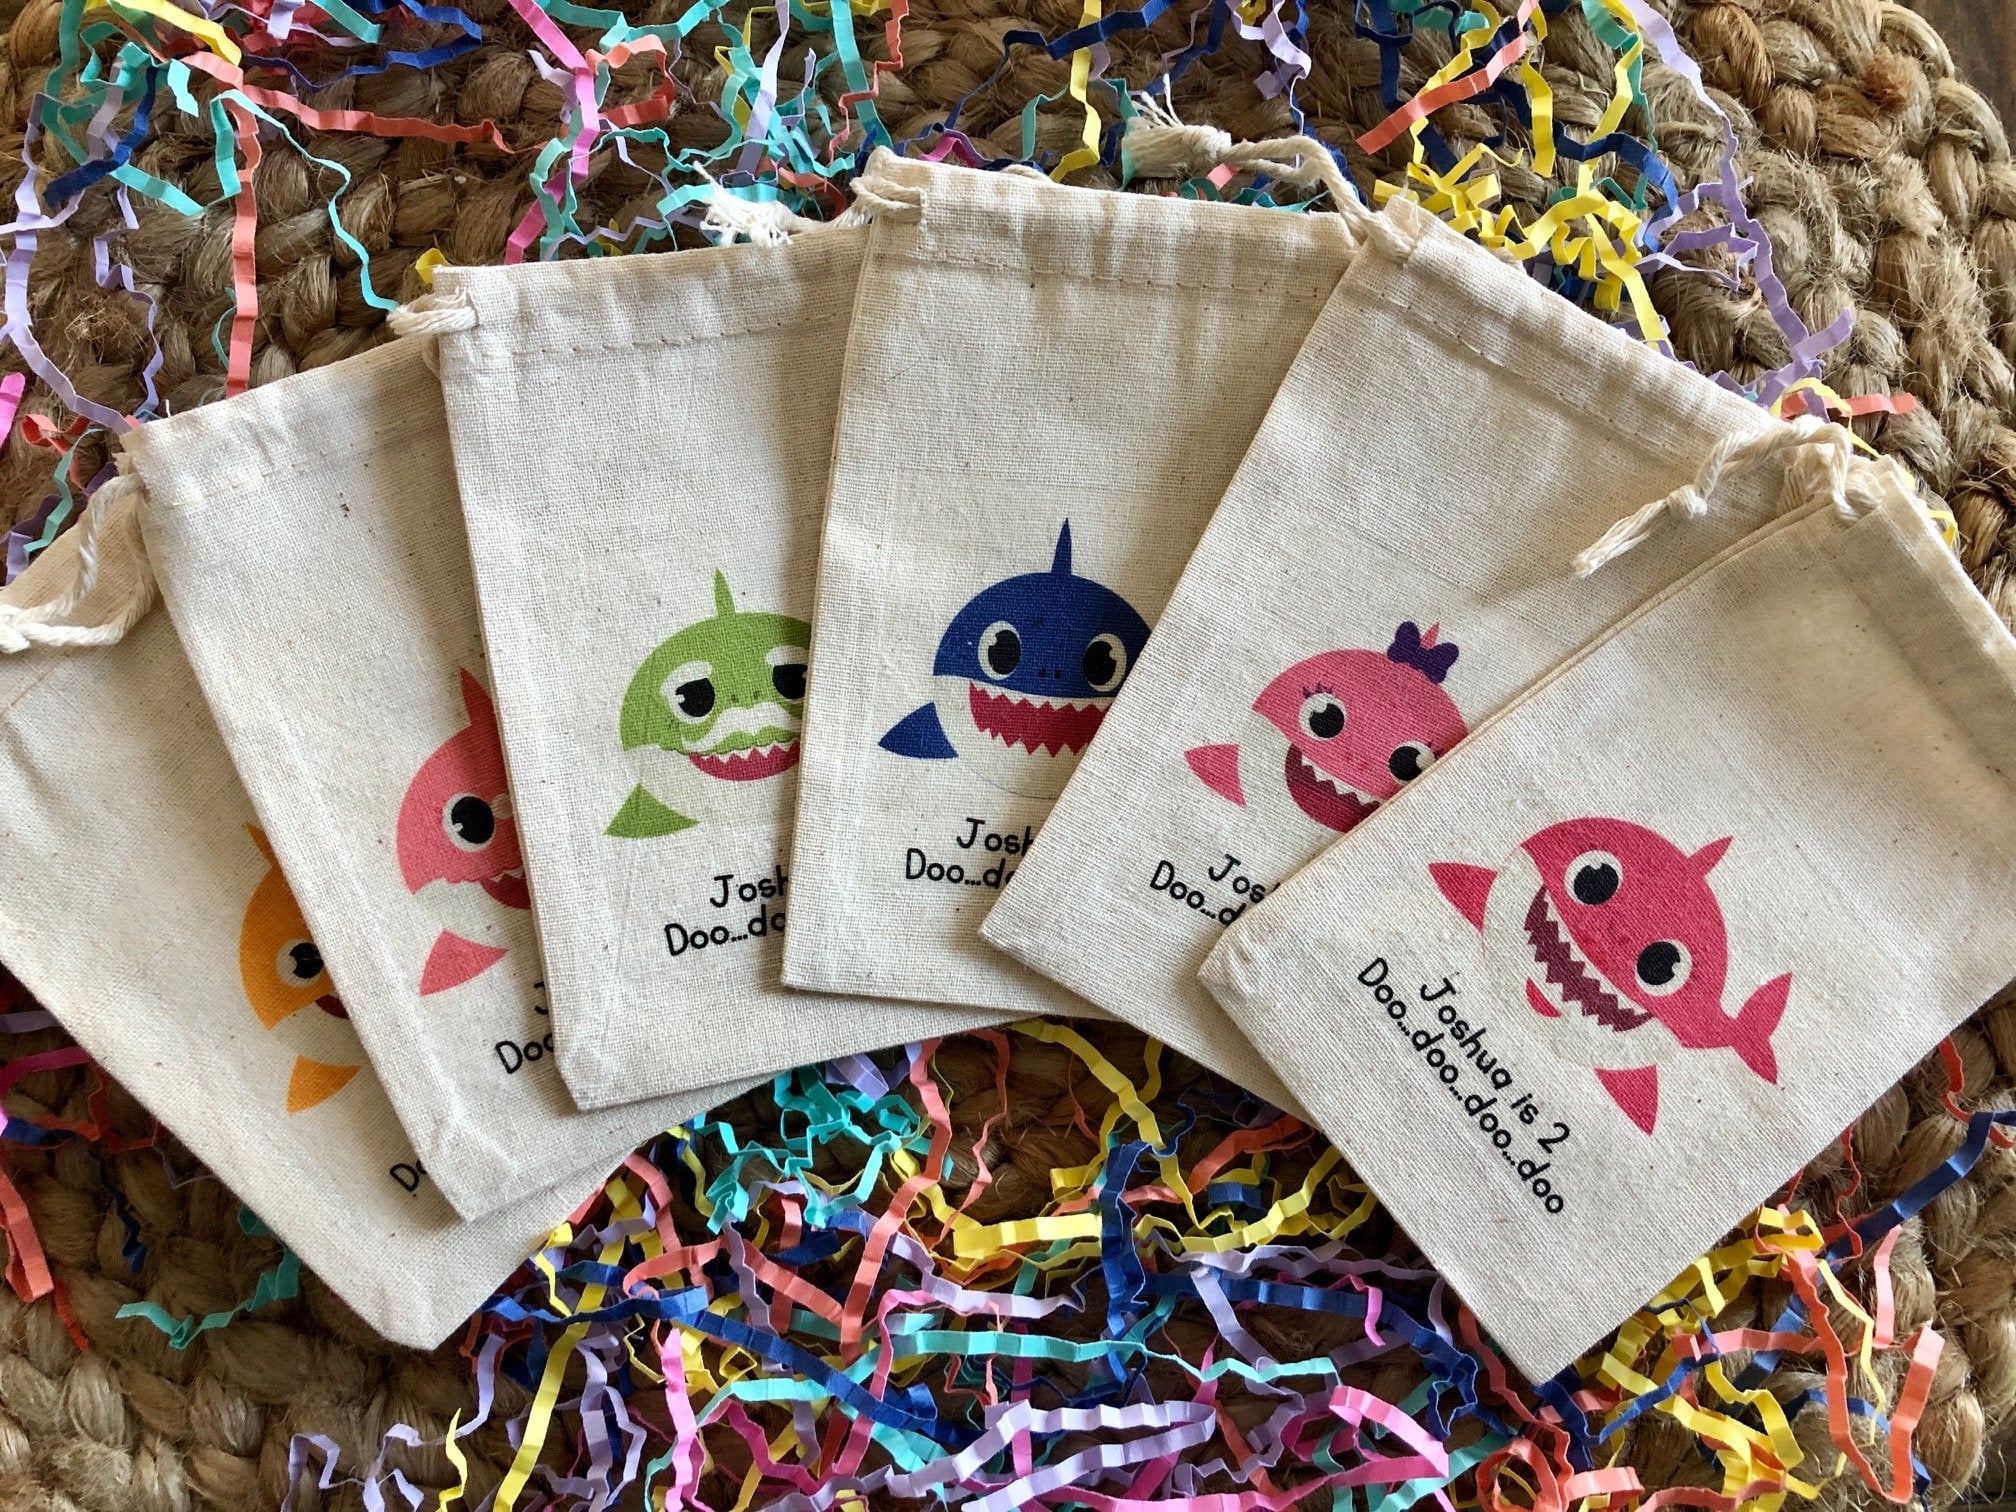 Baby Shark Goodies Gift String Bags for Kids  BulkHunt  BulkHunt   Wholesale Return Gifts Online